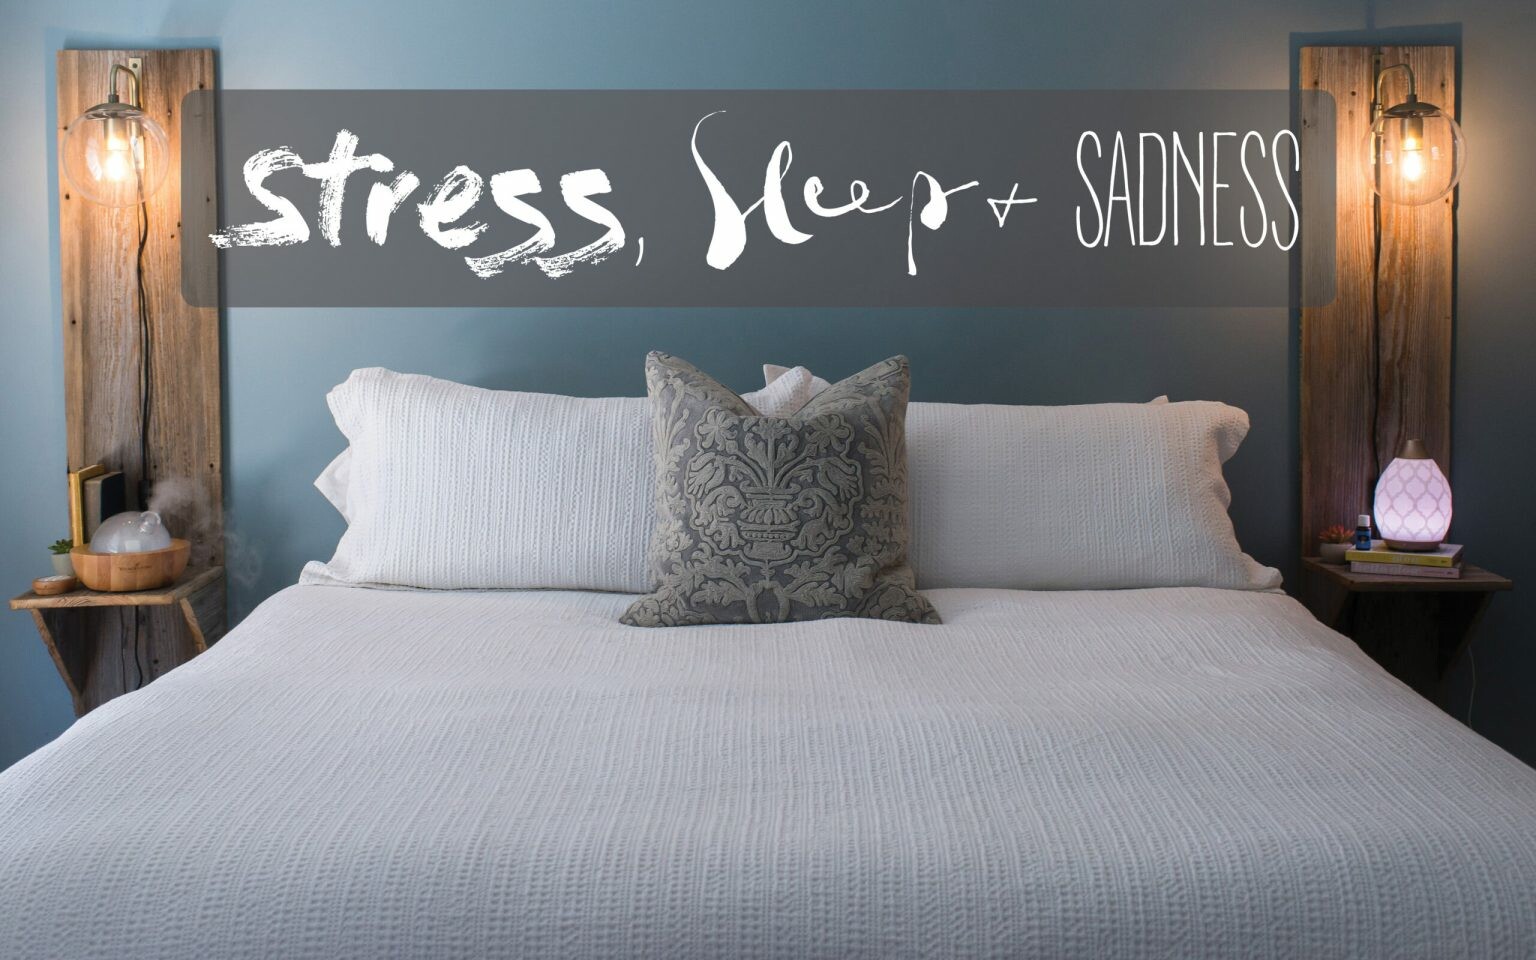 STRESS, SLEEP, AND SADNESS…OH MY!